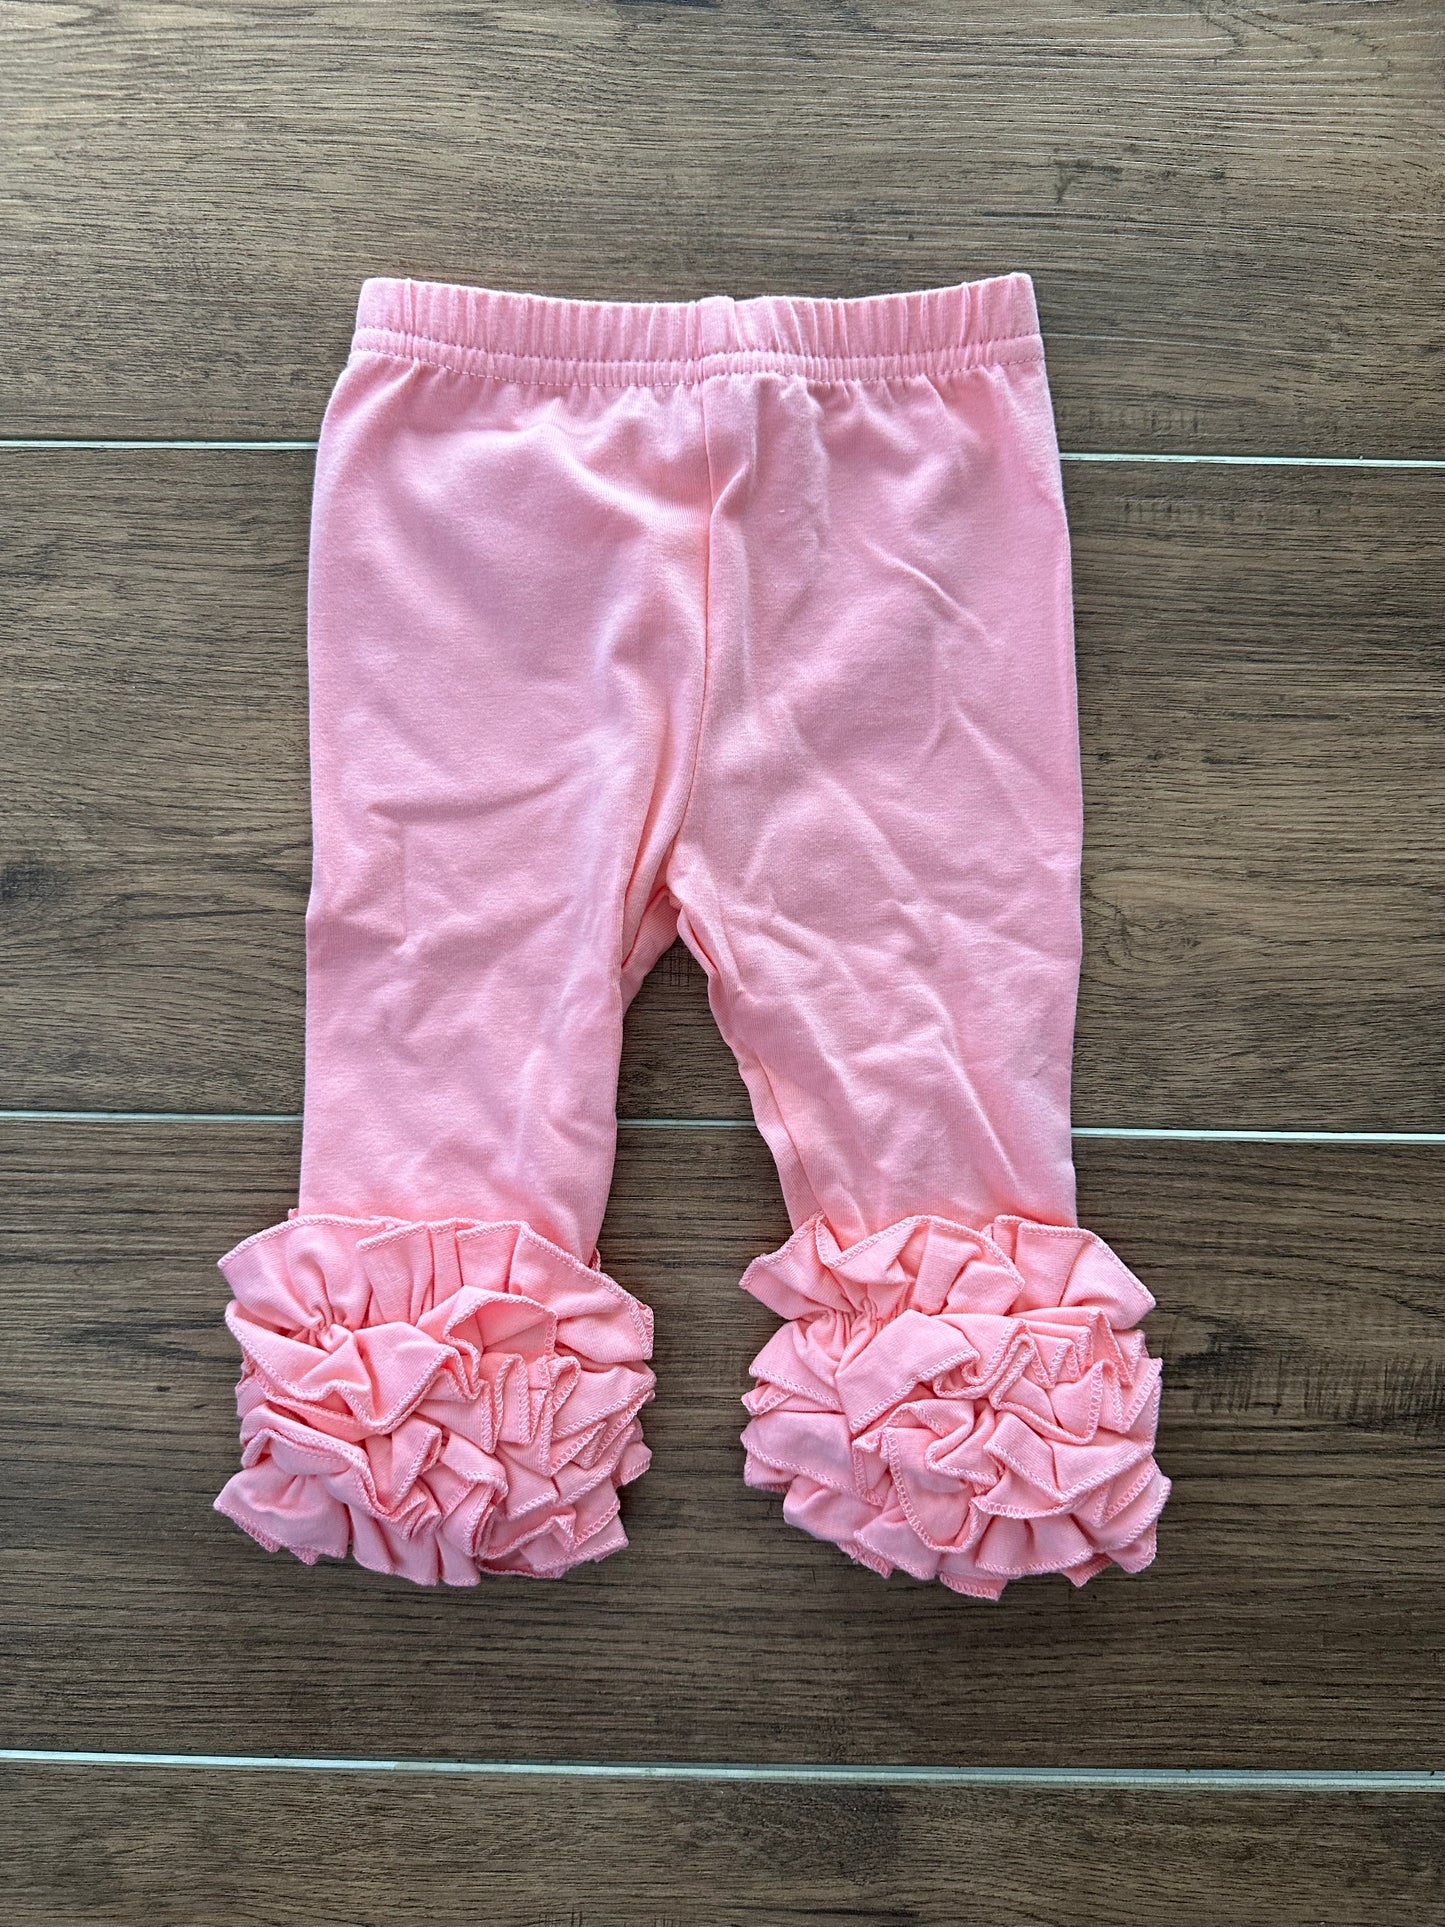 Pink Icing Capris - Ready to ship koi